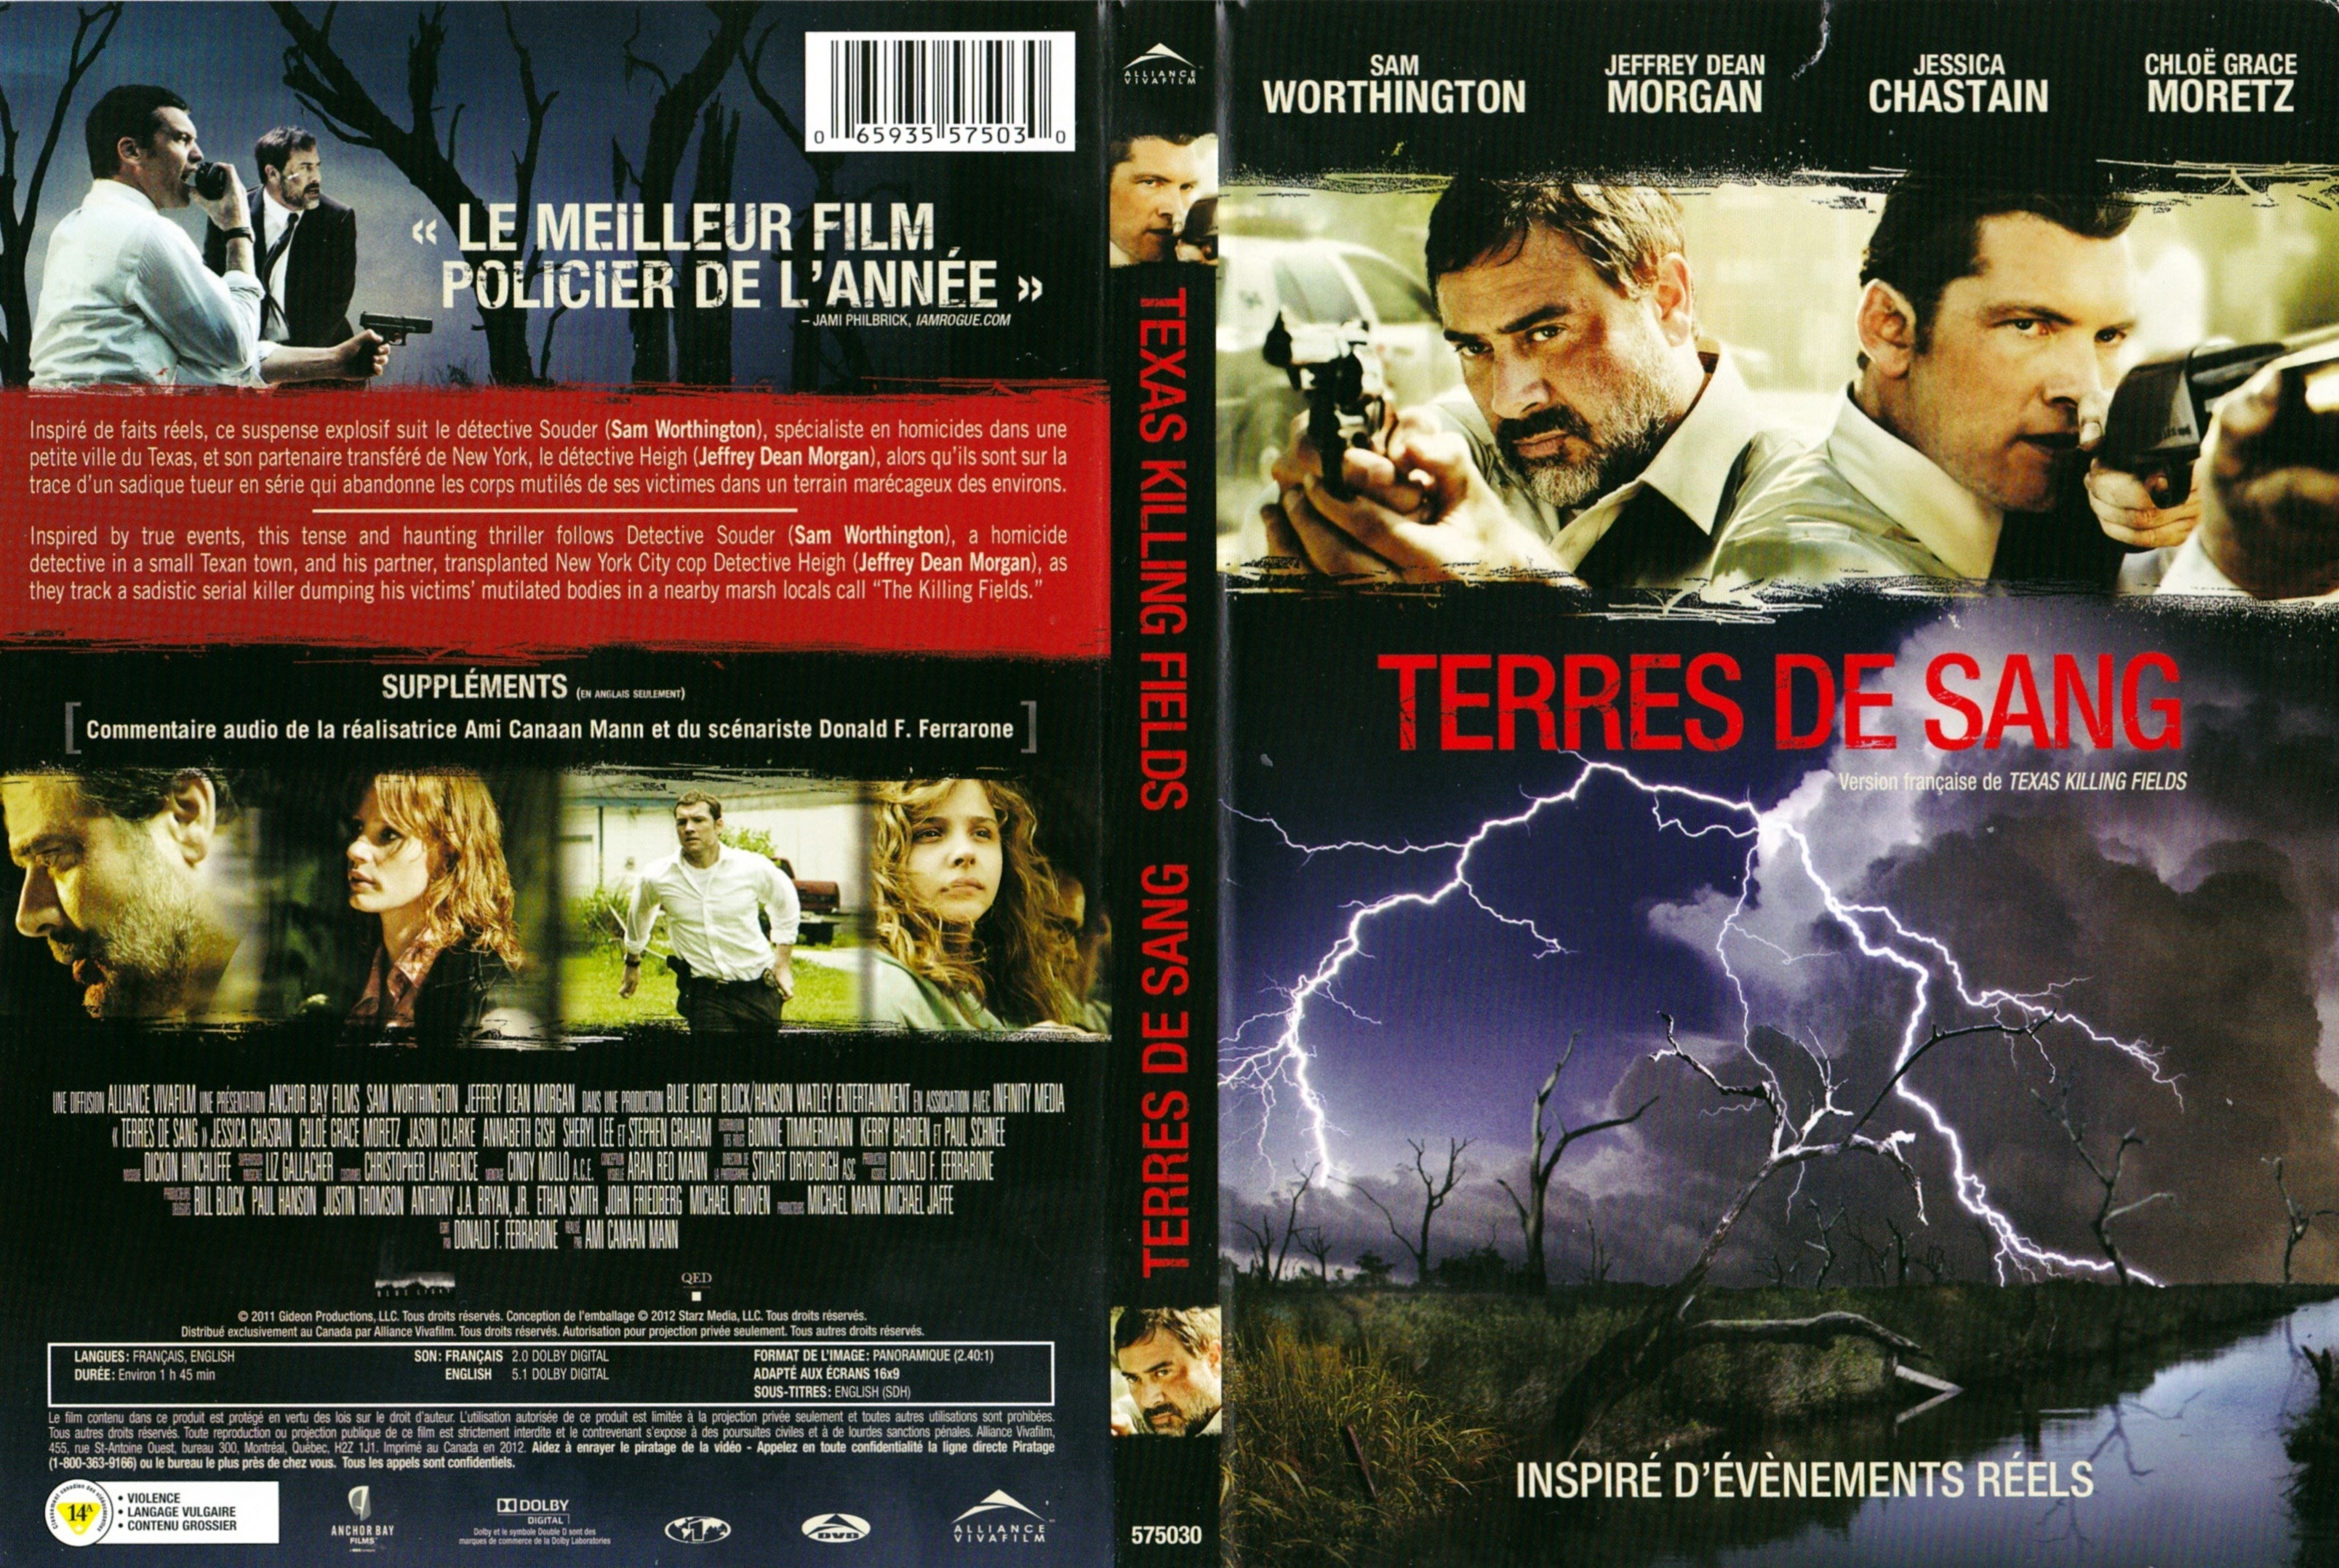 Jaquette DVD Terres de sang - Texas killing field (Canadienne)